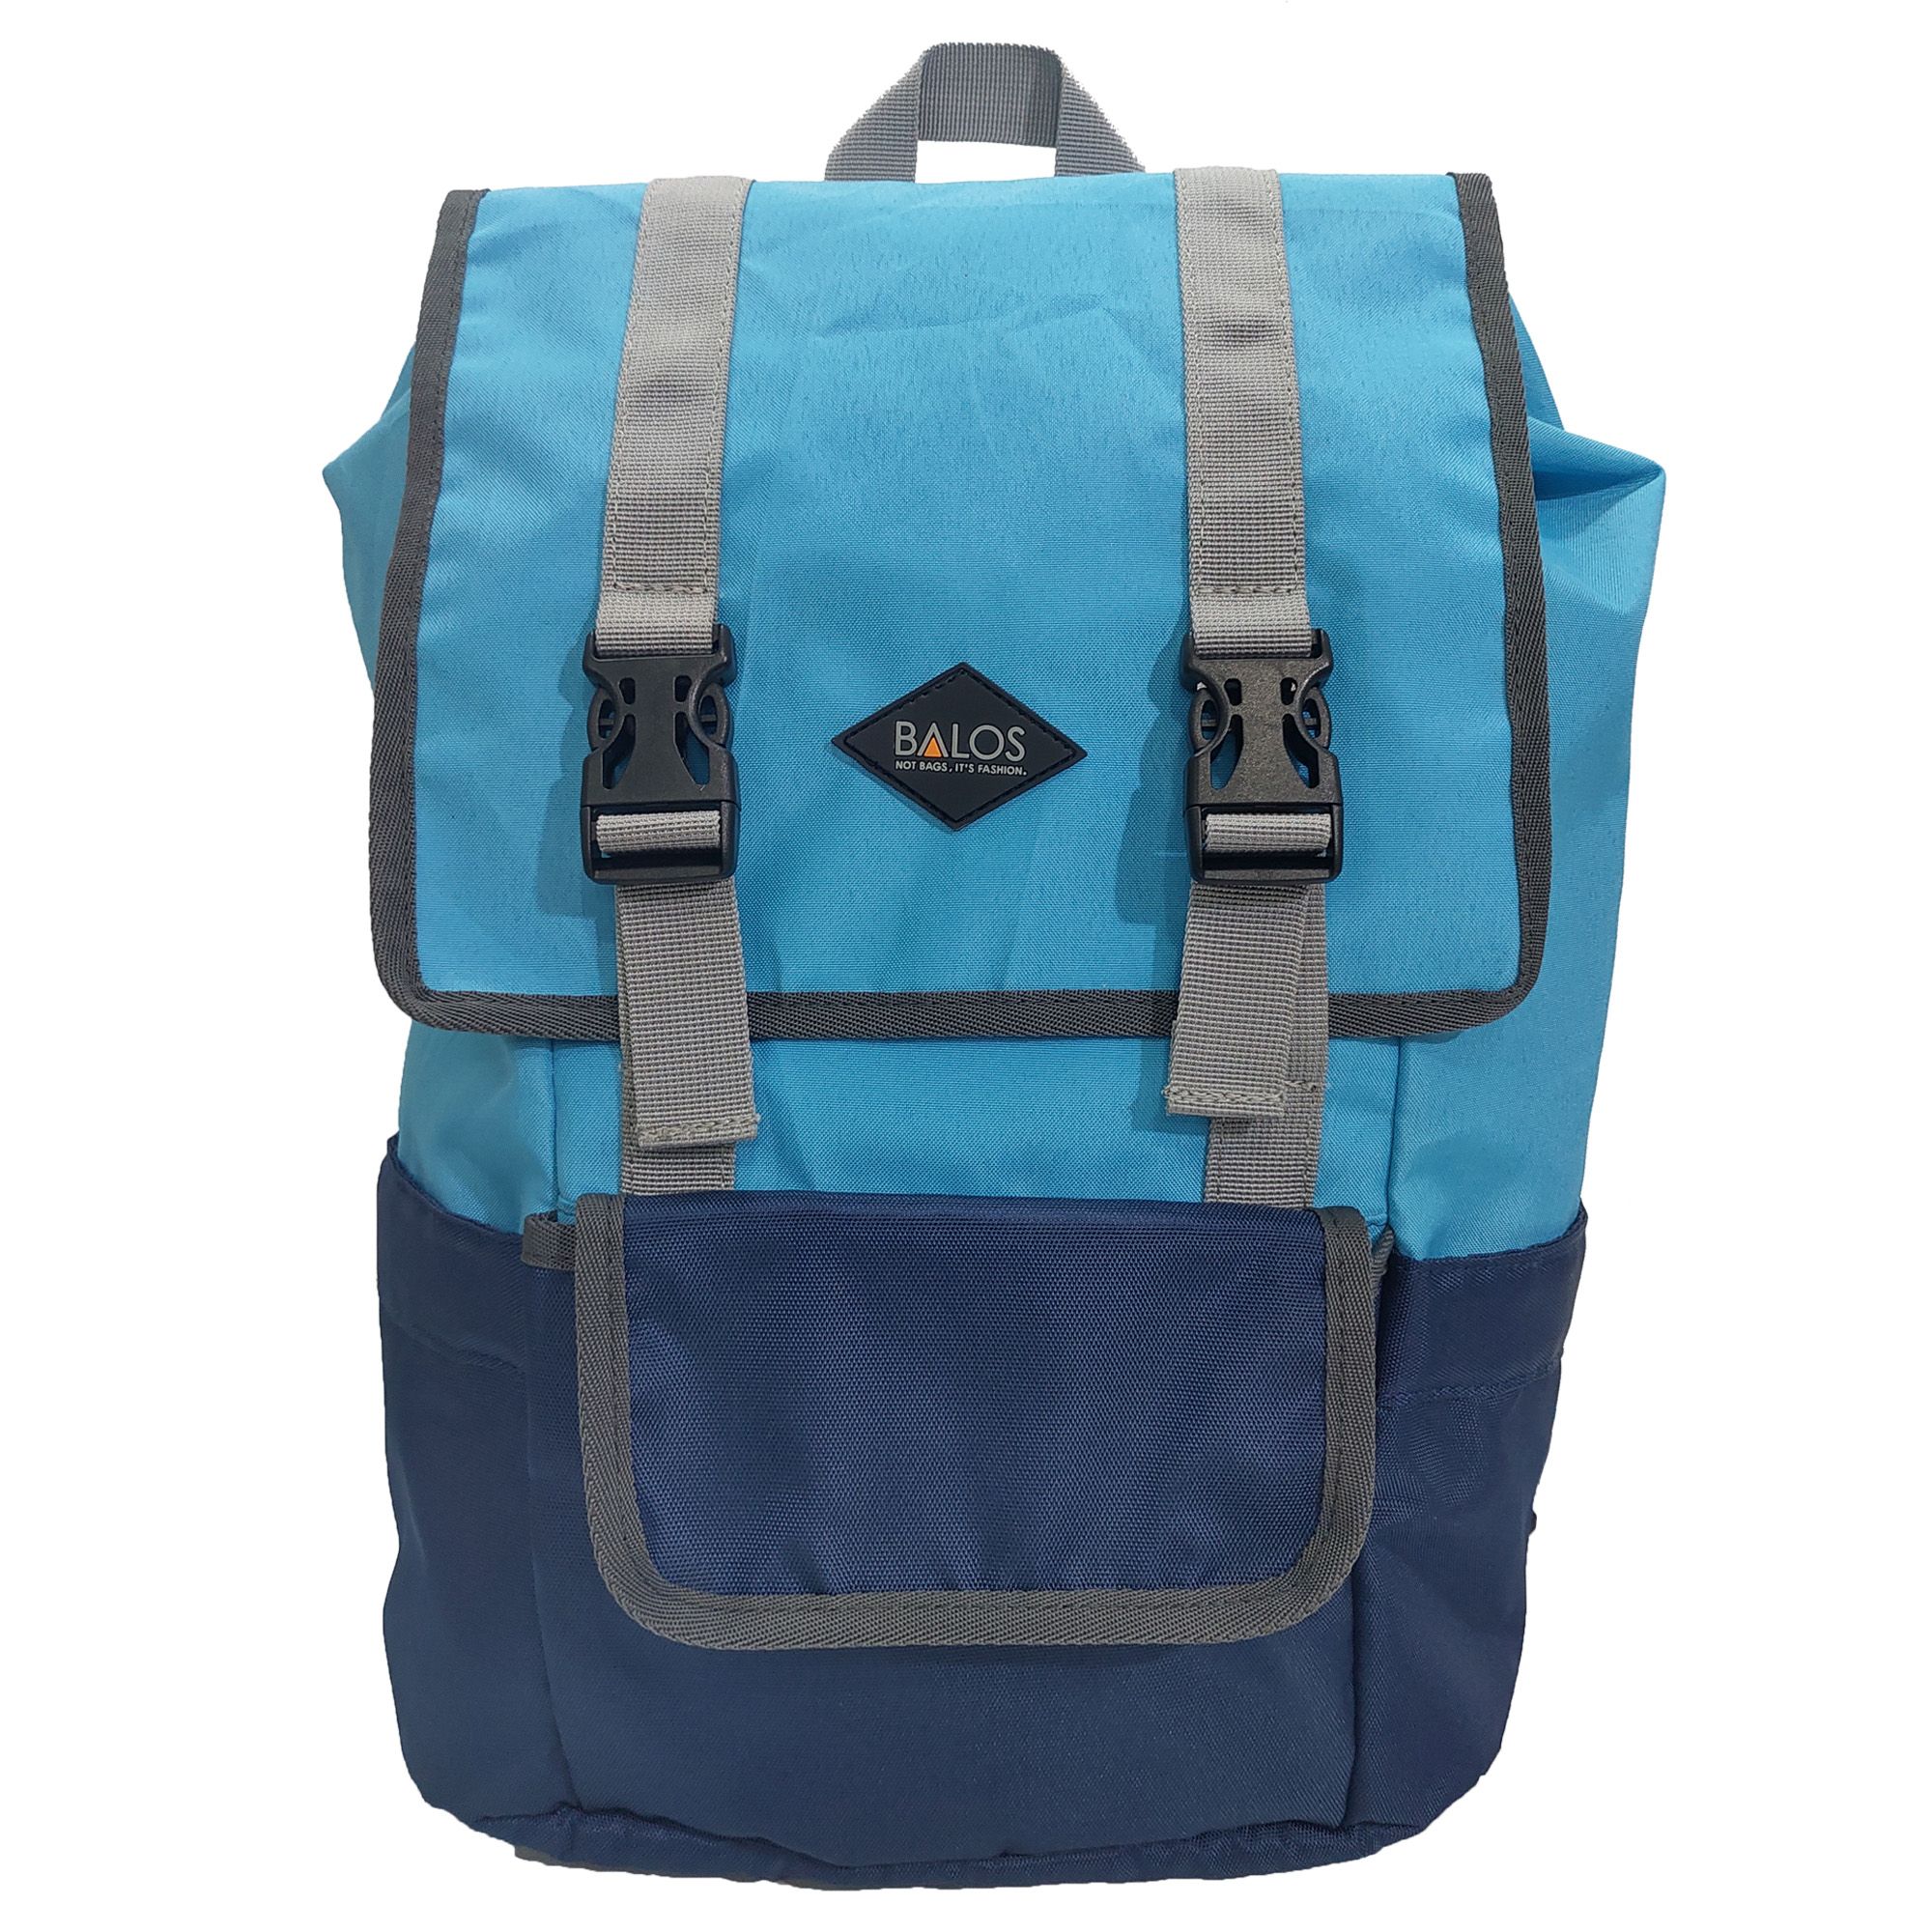  Balos SKY FLAP Blue/Navy Backpack - Balo Laptop thời trang 